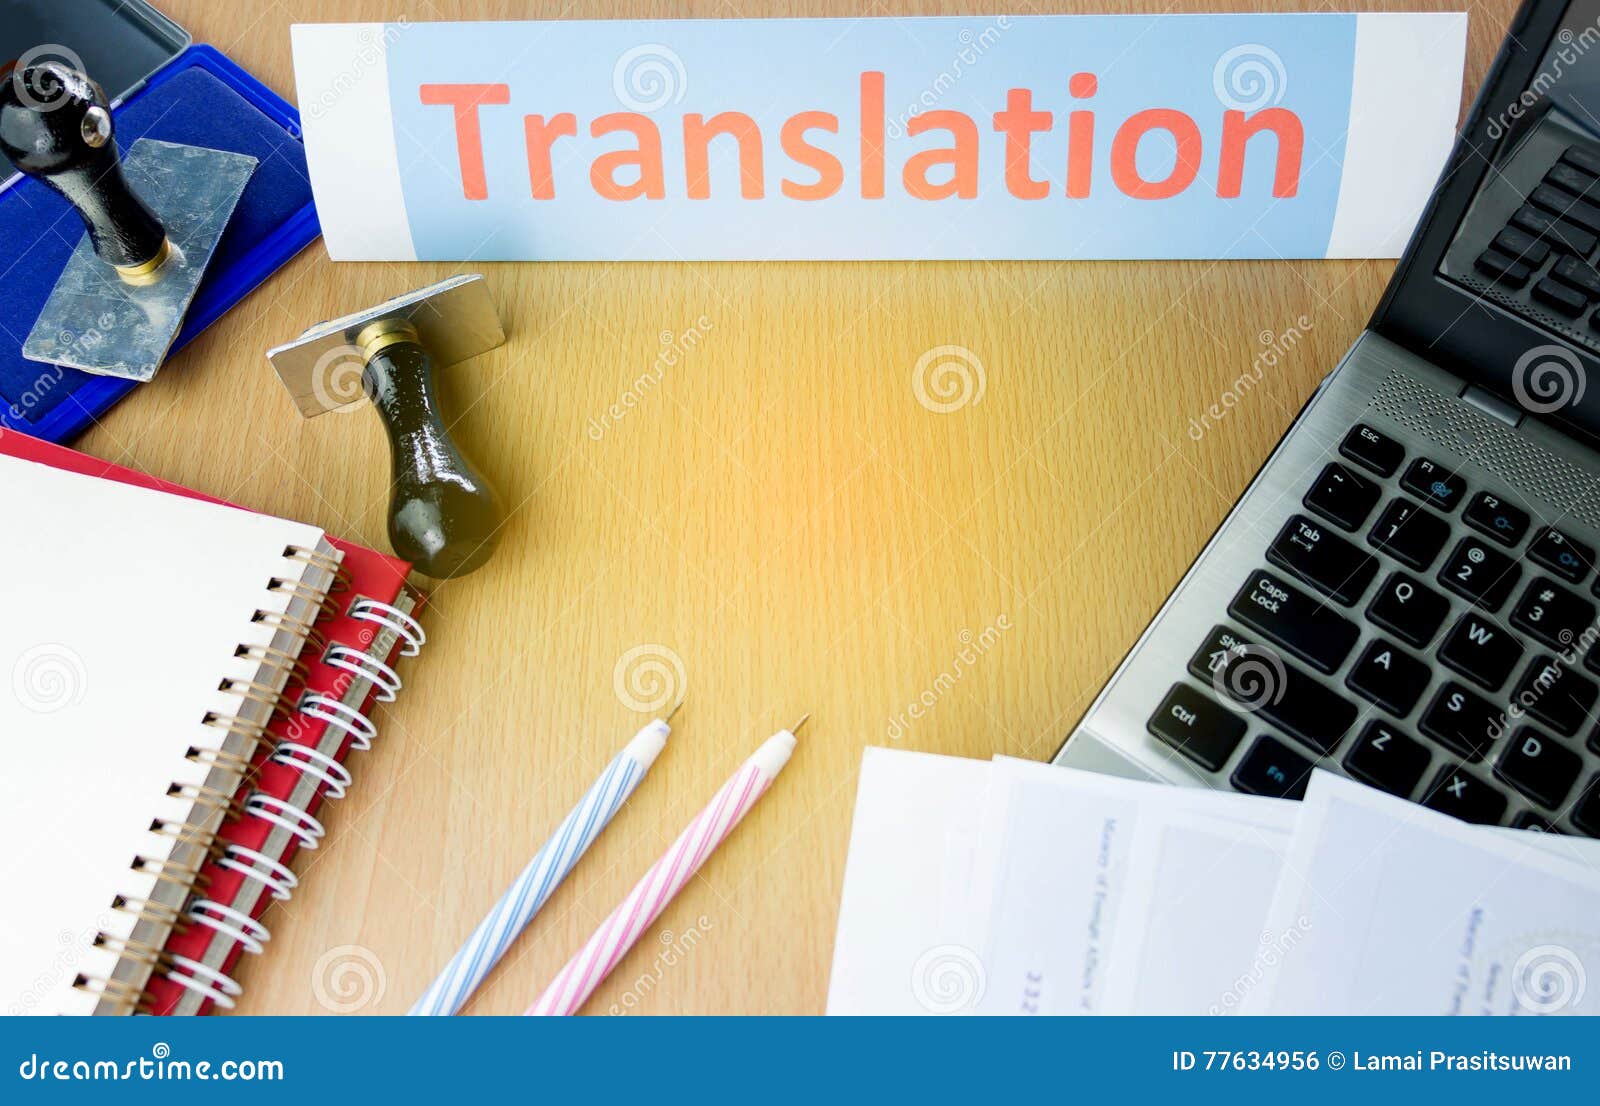 translation word on office table